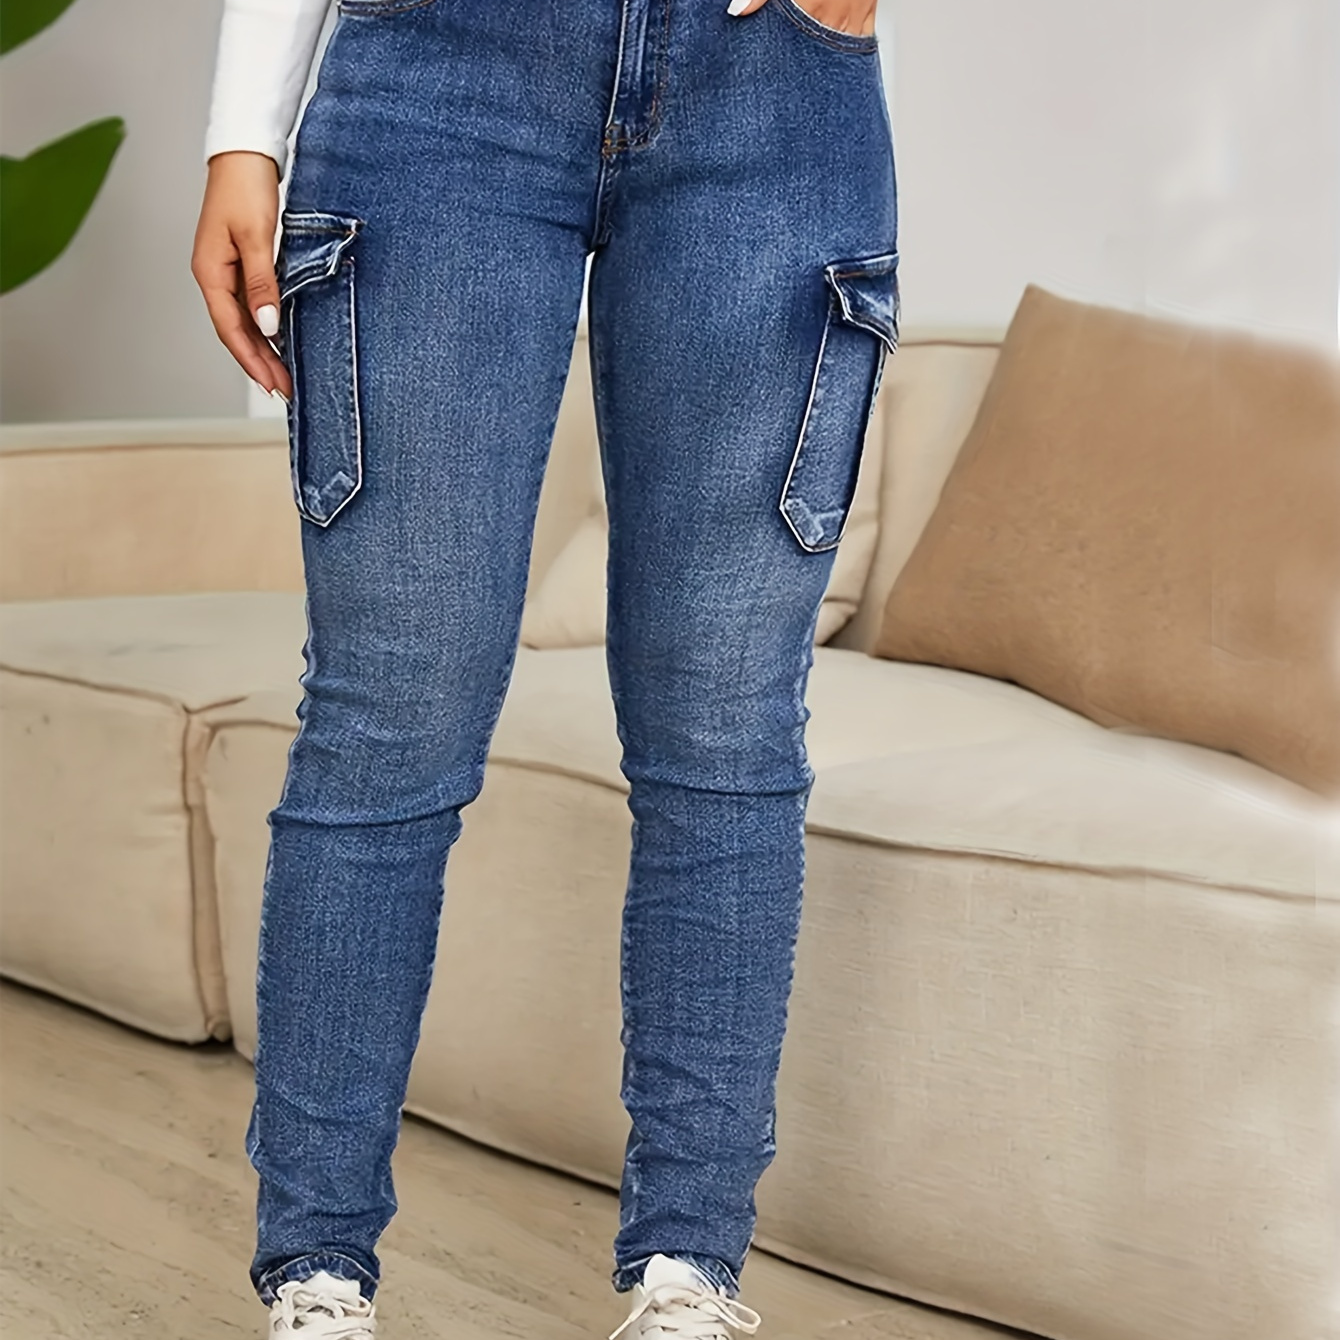 

Side Flap Pocket Skinny Fit Cargo Jeans, Plain Washed Blue Denim Pants, Women's Denim Jeans & Clothing